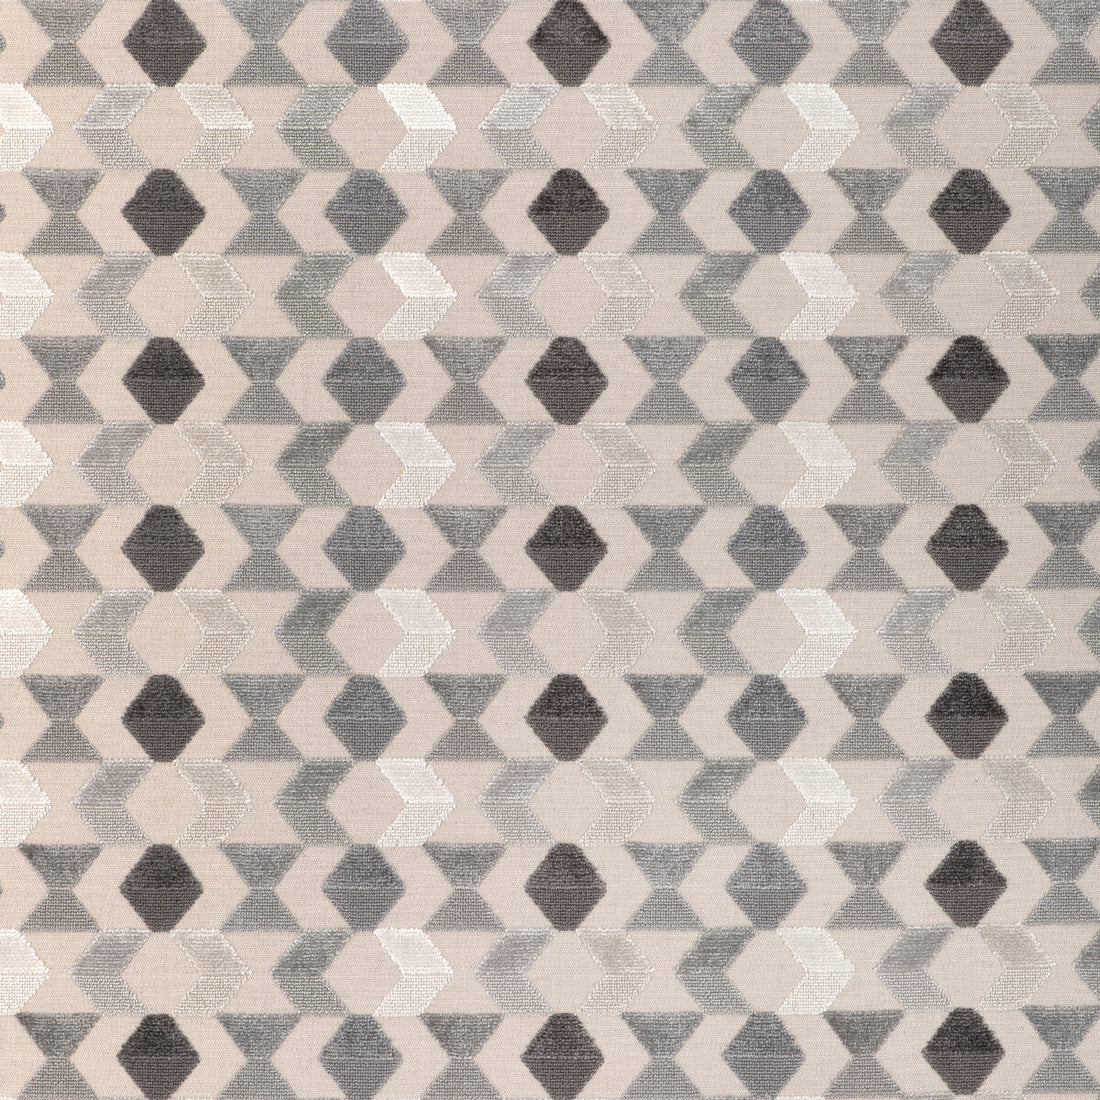 Kravet Design fabric in 36979-11 color - pattern 36979.11.0 - by Kravet Design in the Modern Velvets collection